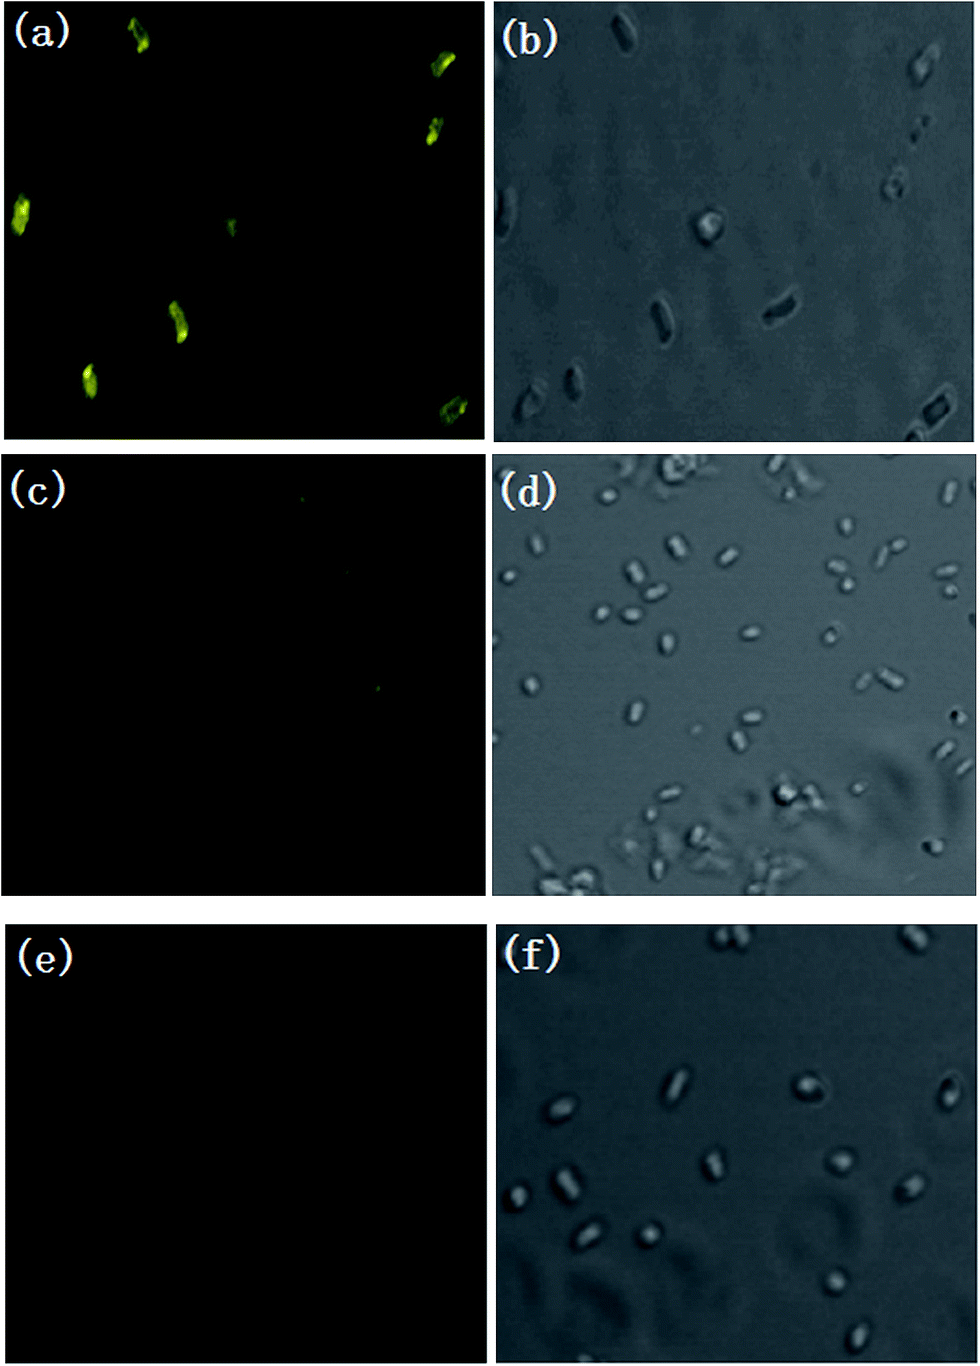 A Colorimetric And Fluorescent Ph Probe For Imaging In E Coli Cells Rsc Advances Rsc Publishing Doi 10 1039 C6ra245c